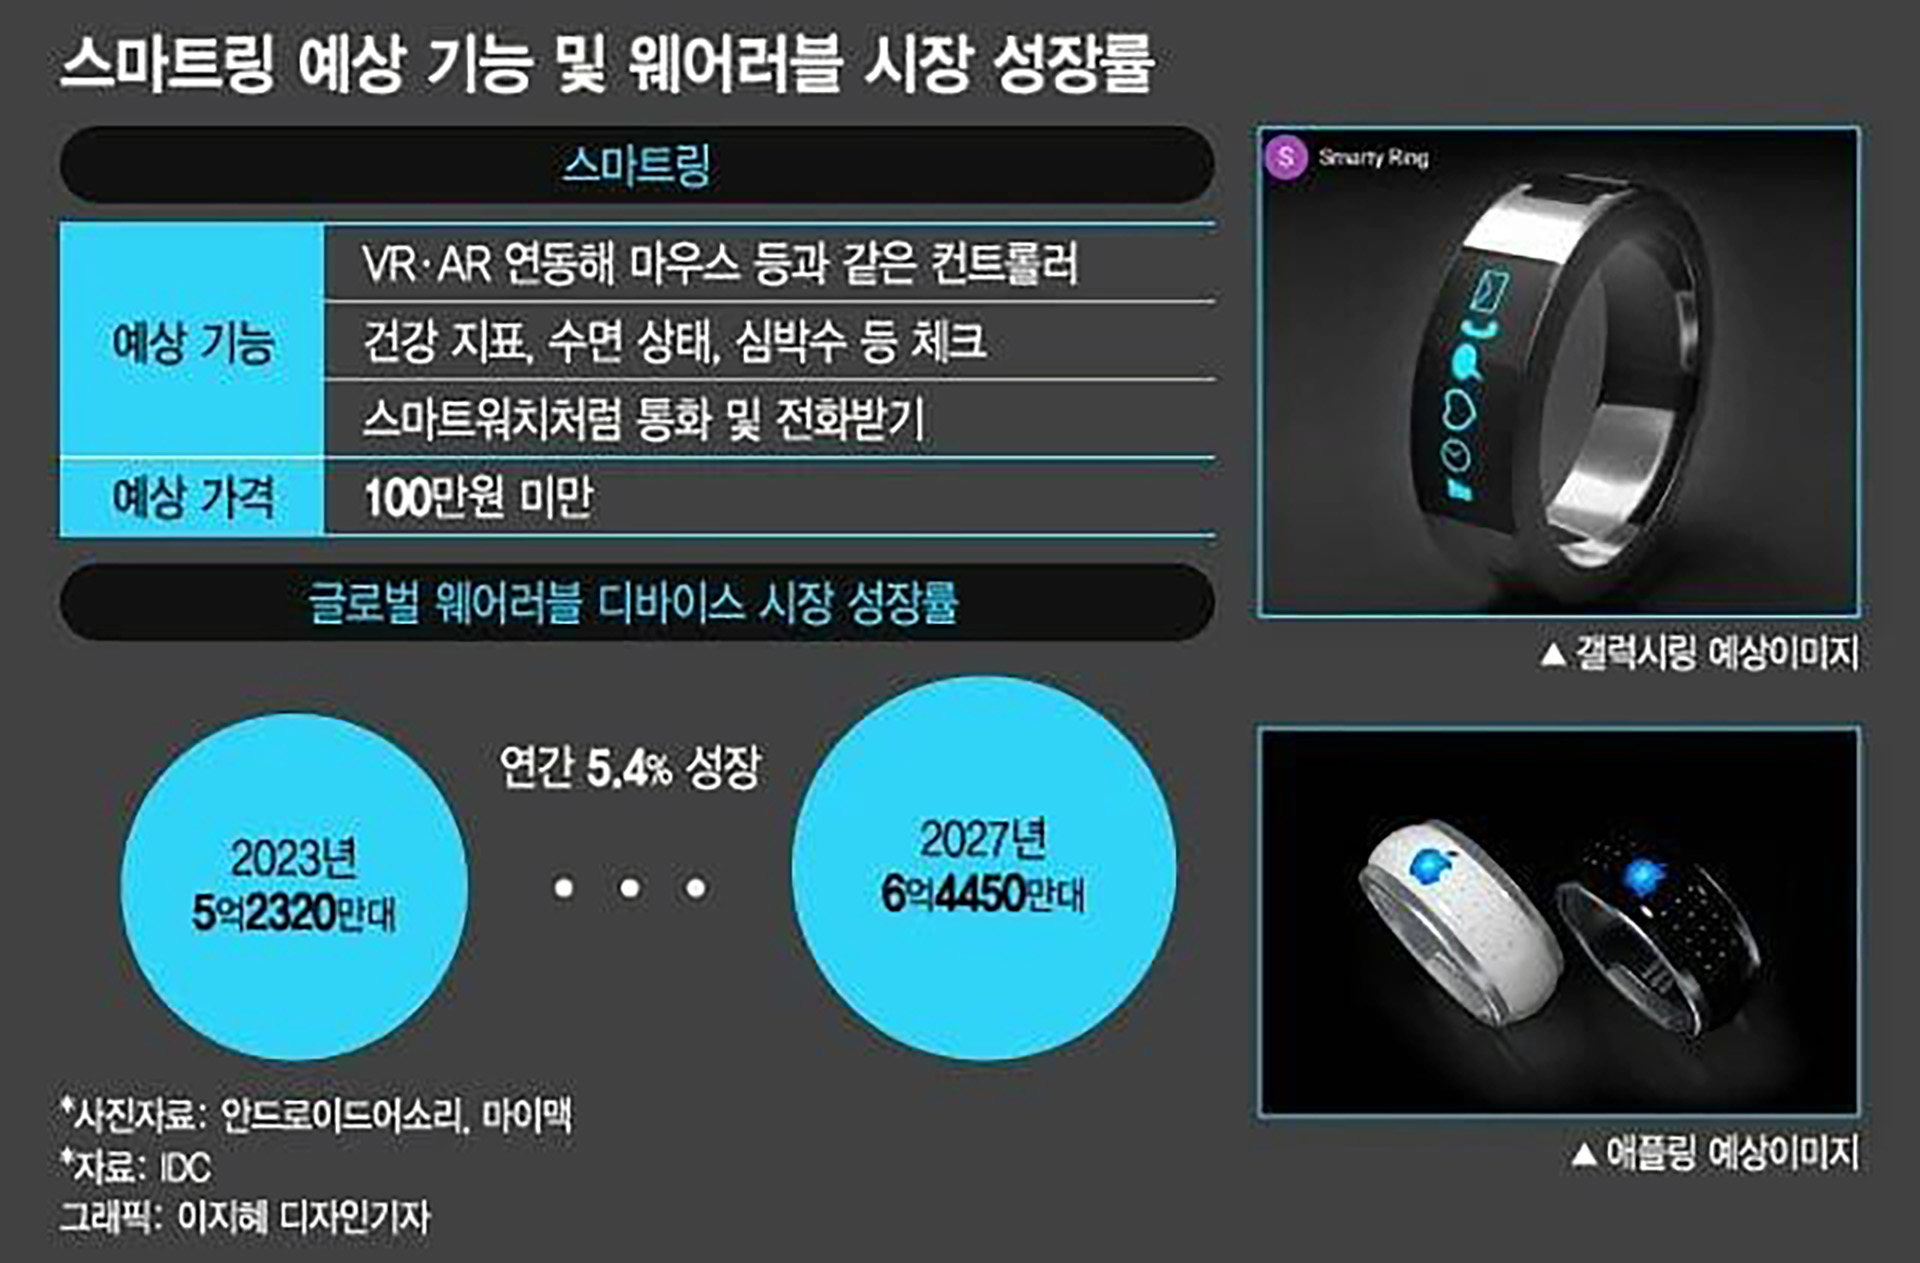 Samsung’s Smart Ring